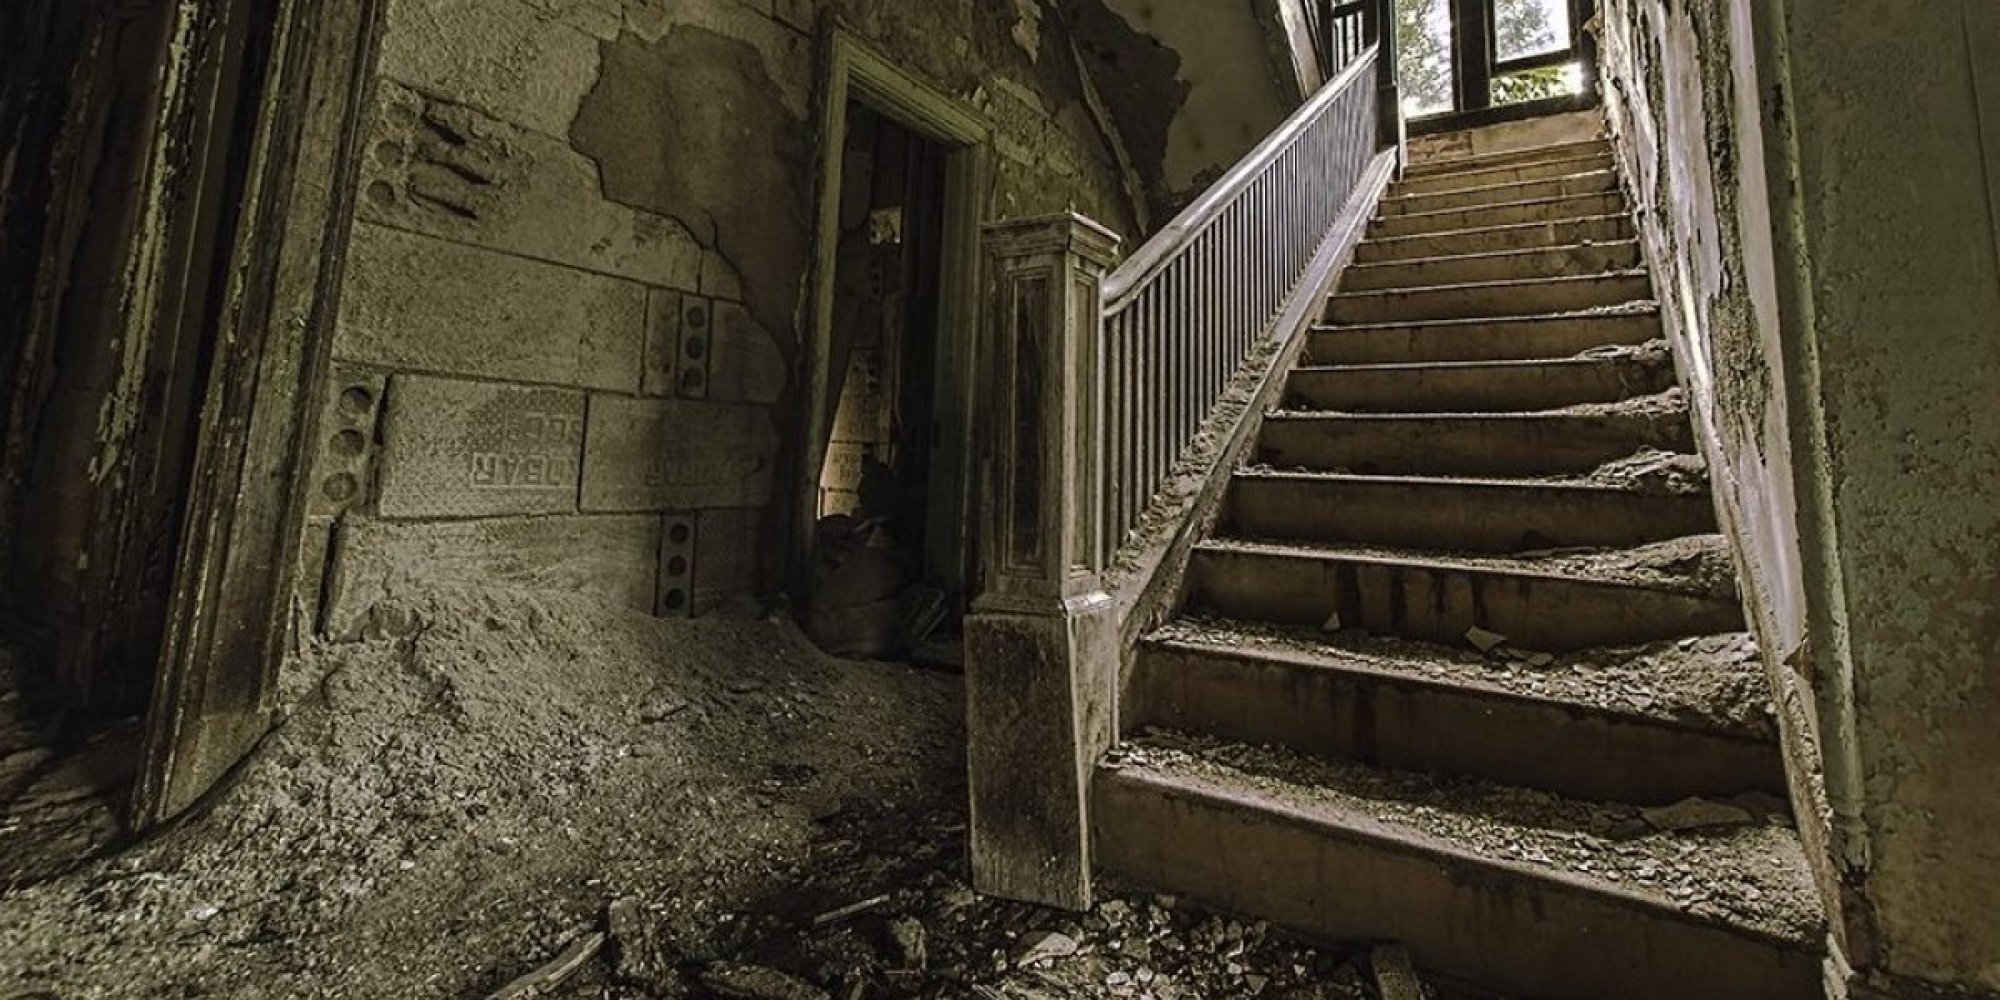 13 Photos Of Creepy Abandoned Places Photos Freaktography